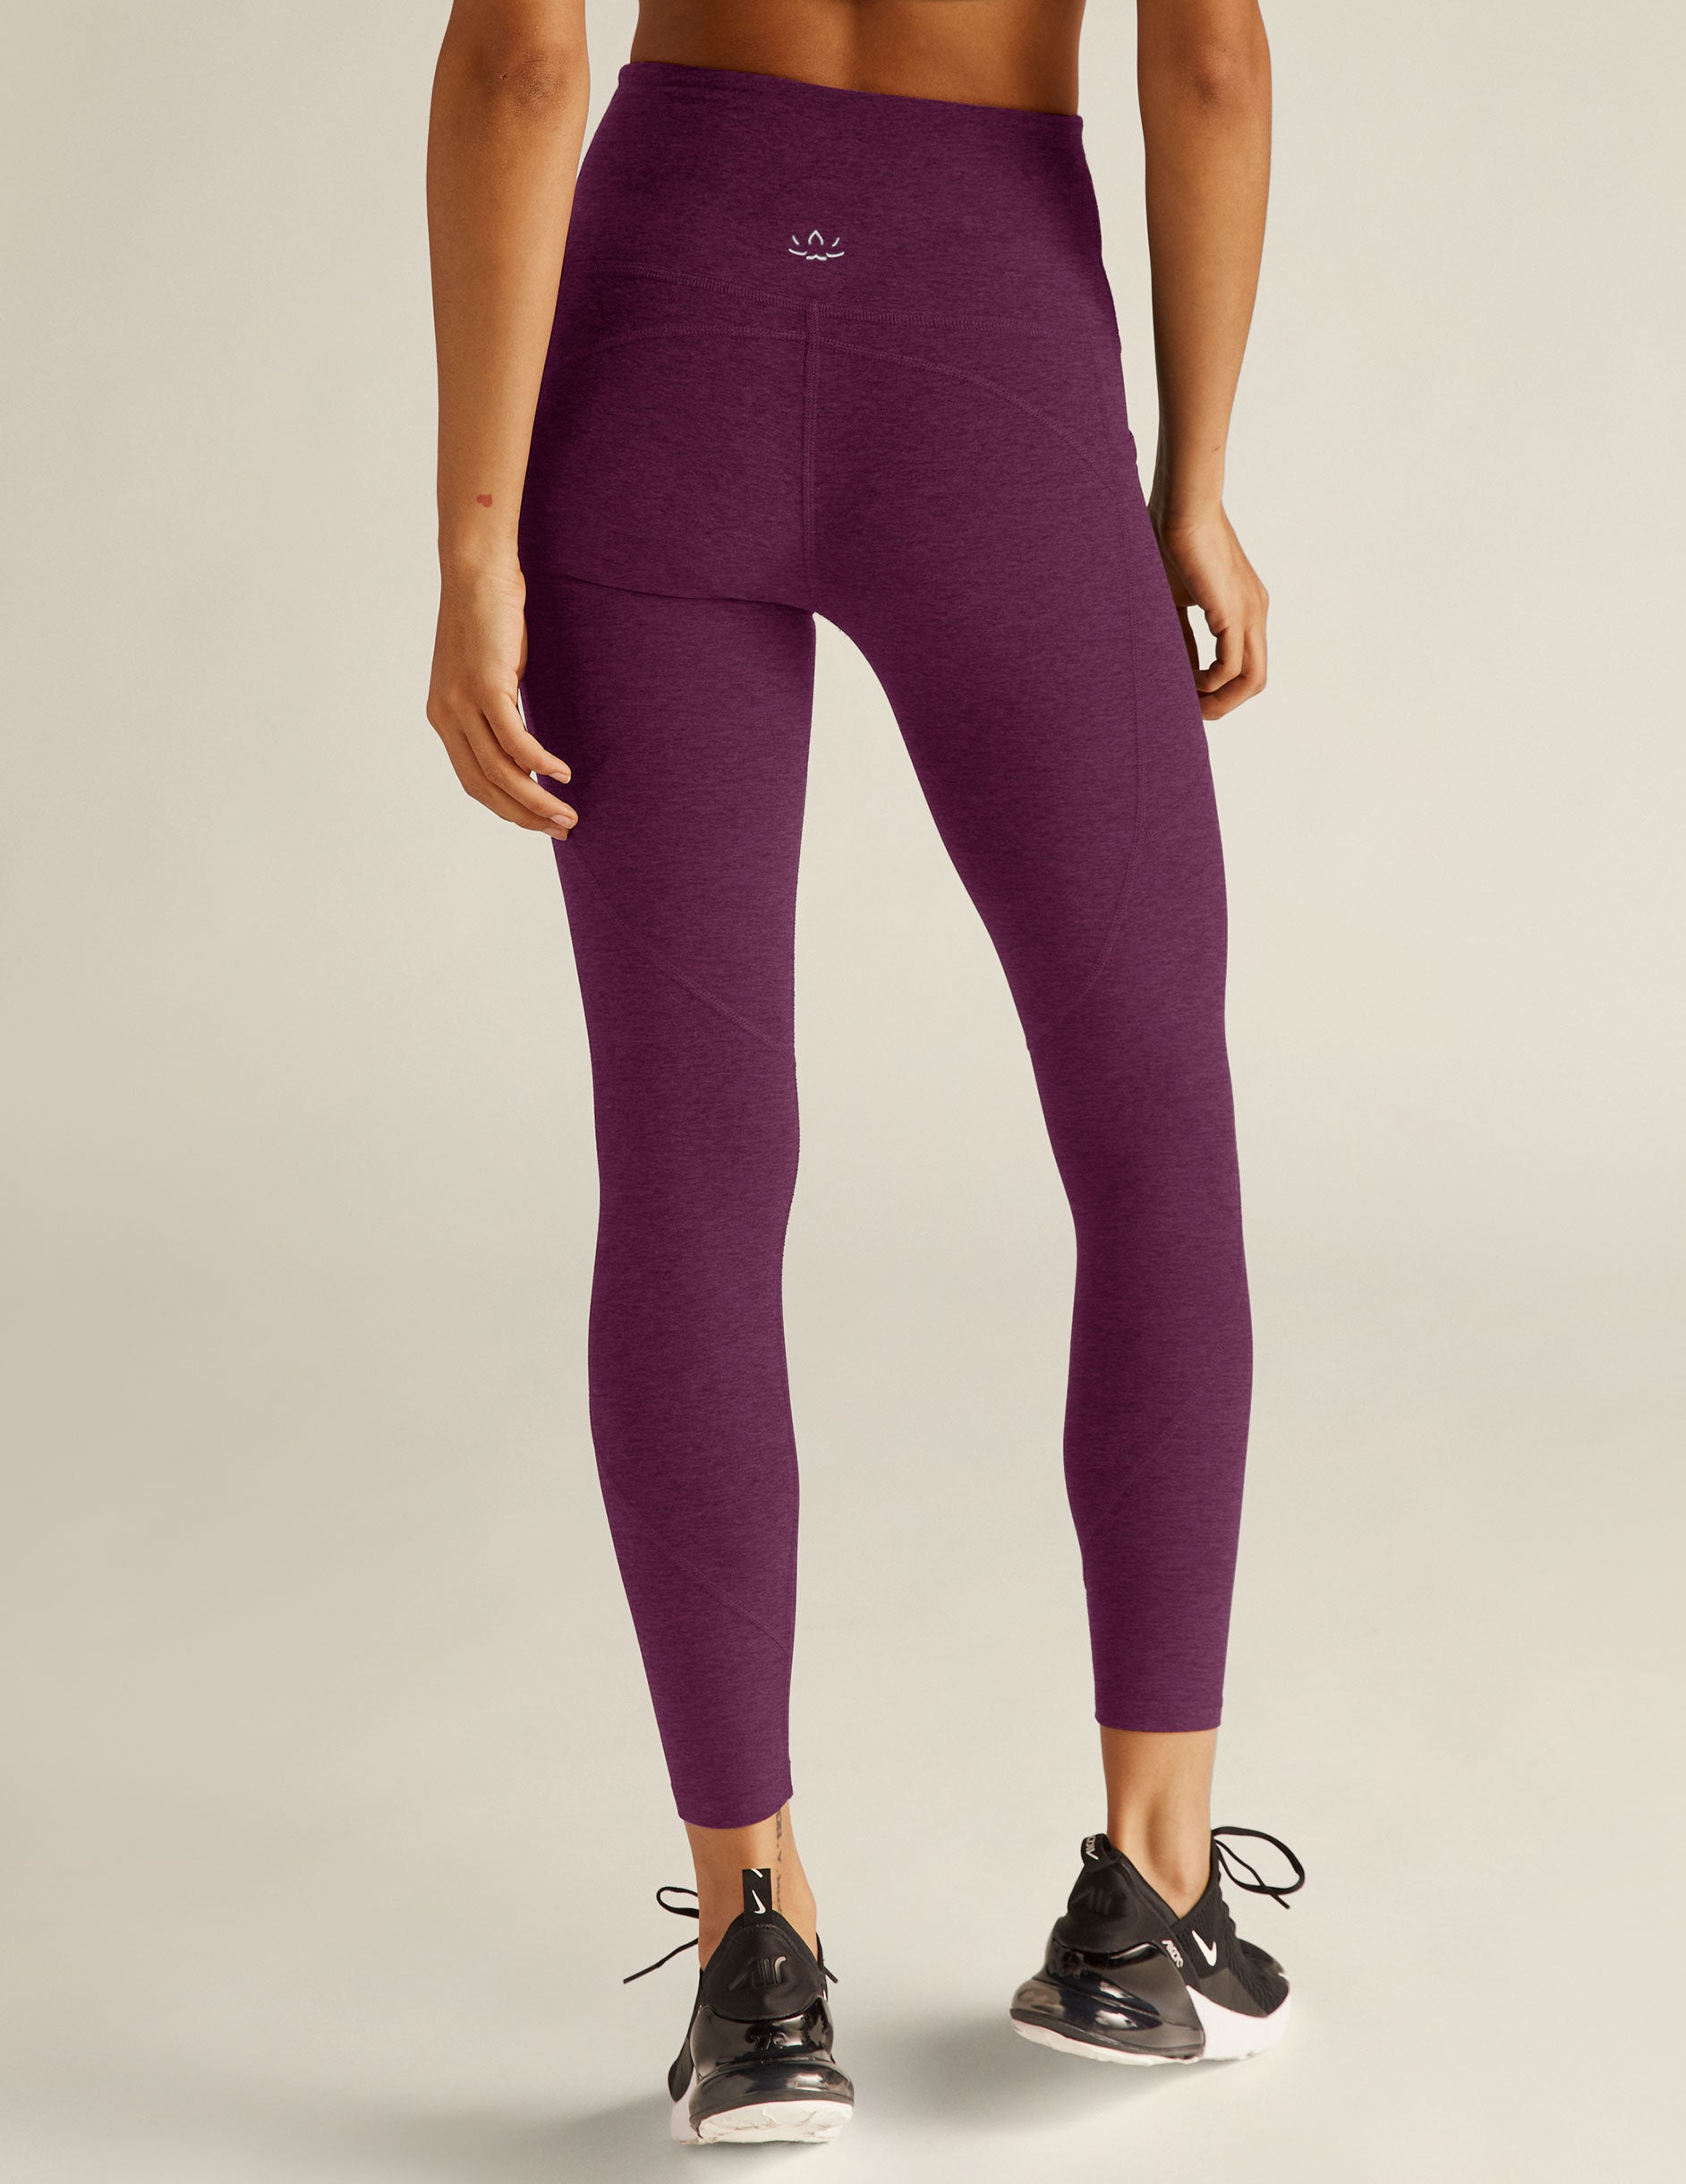 Beyond Yoga Purple Leggings Size XS - 54% off